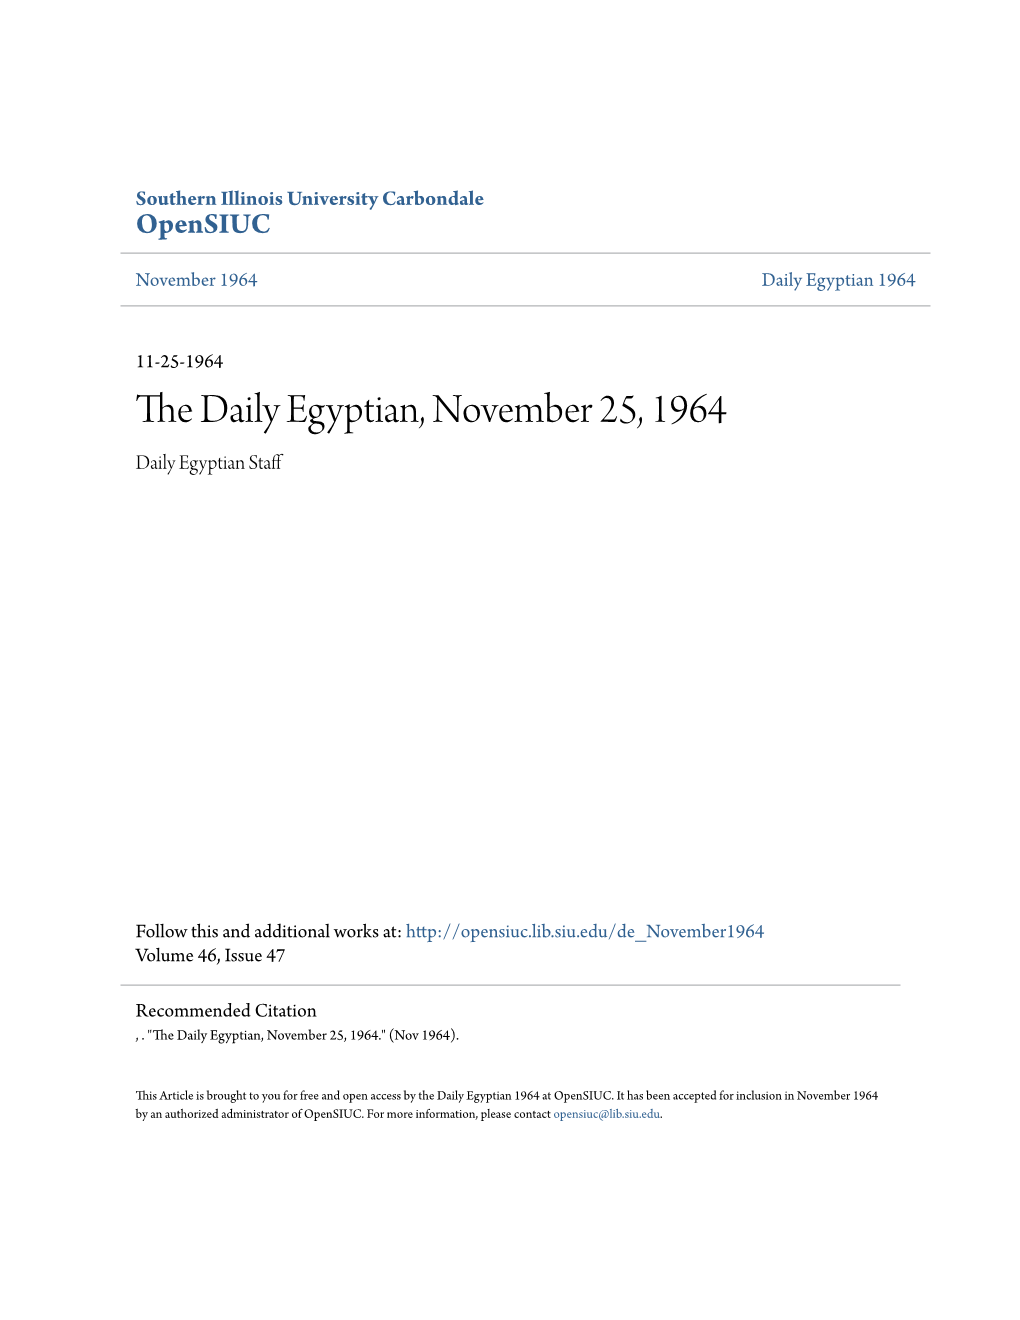 The Daily Egyptian, November 25, 1964